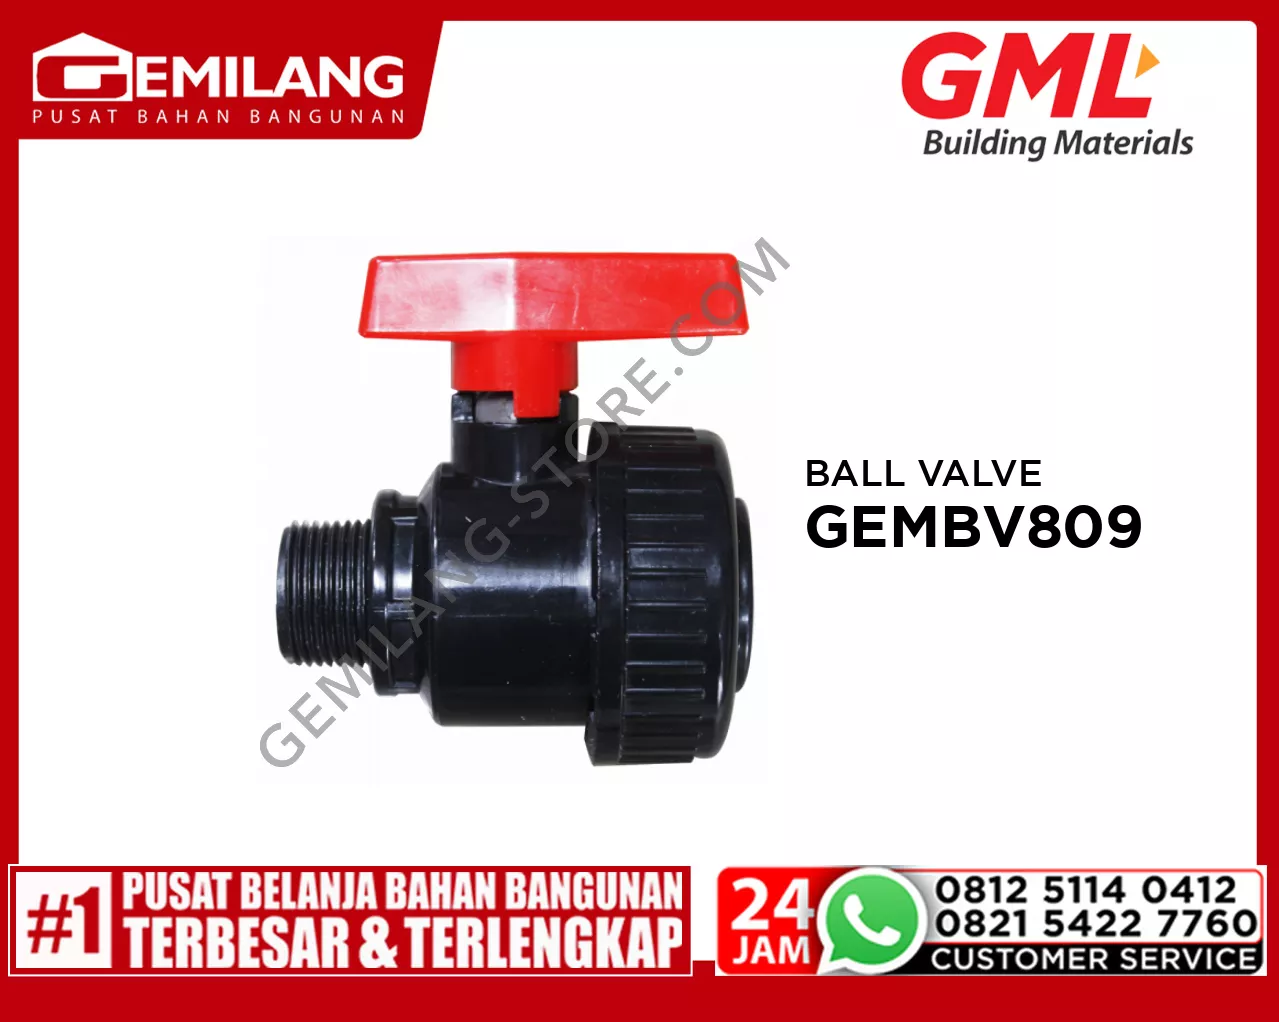 GML BALL VALVE UNION 1 1/2inch GEMBV809